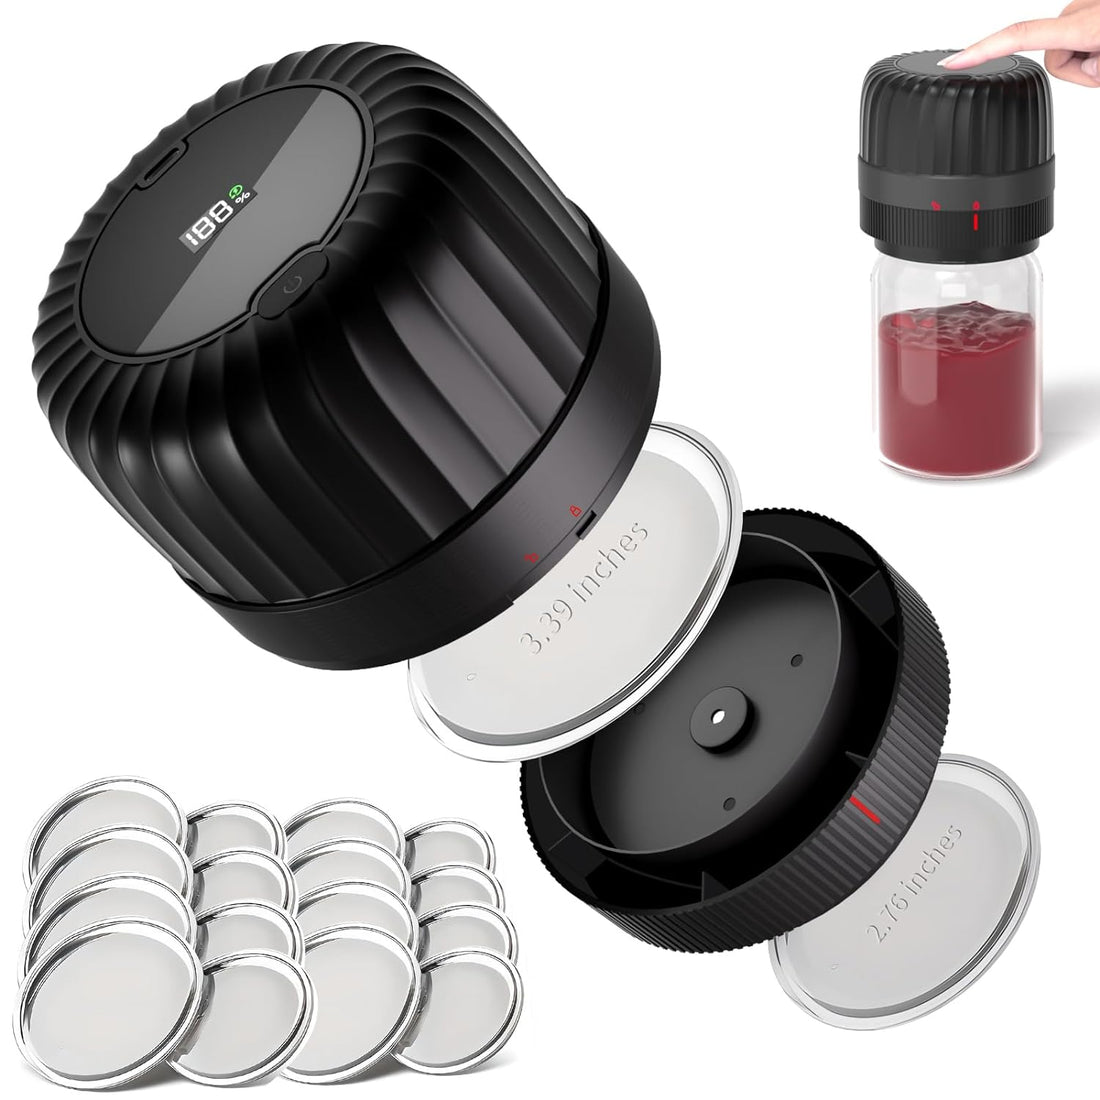 KITOOL Electric Mason Jar Vacuum Sealer Kit for Wide-Mouth & Regular-Mouth Mason Jars, Food Saver Vacuum Canning Sealer Machine Includes 16 Jar Lids